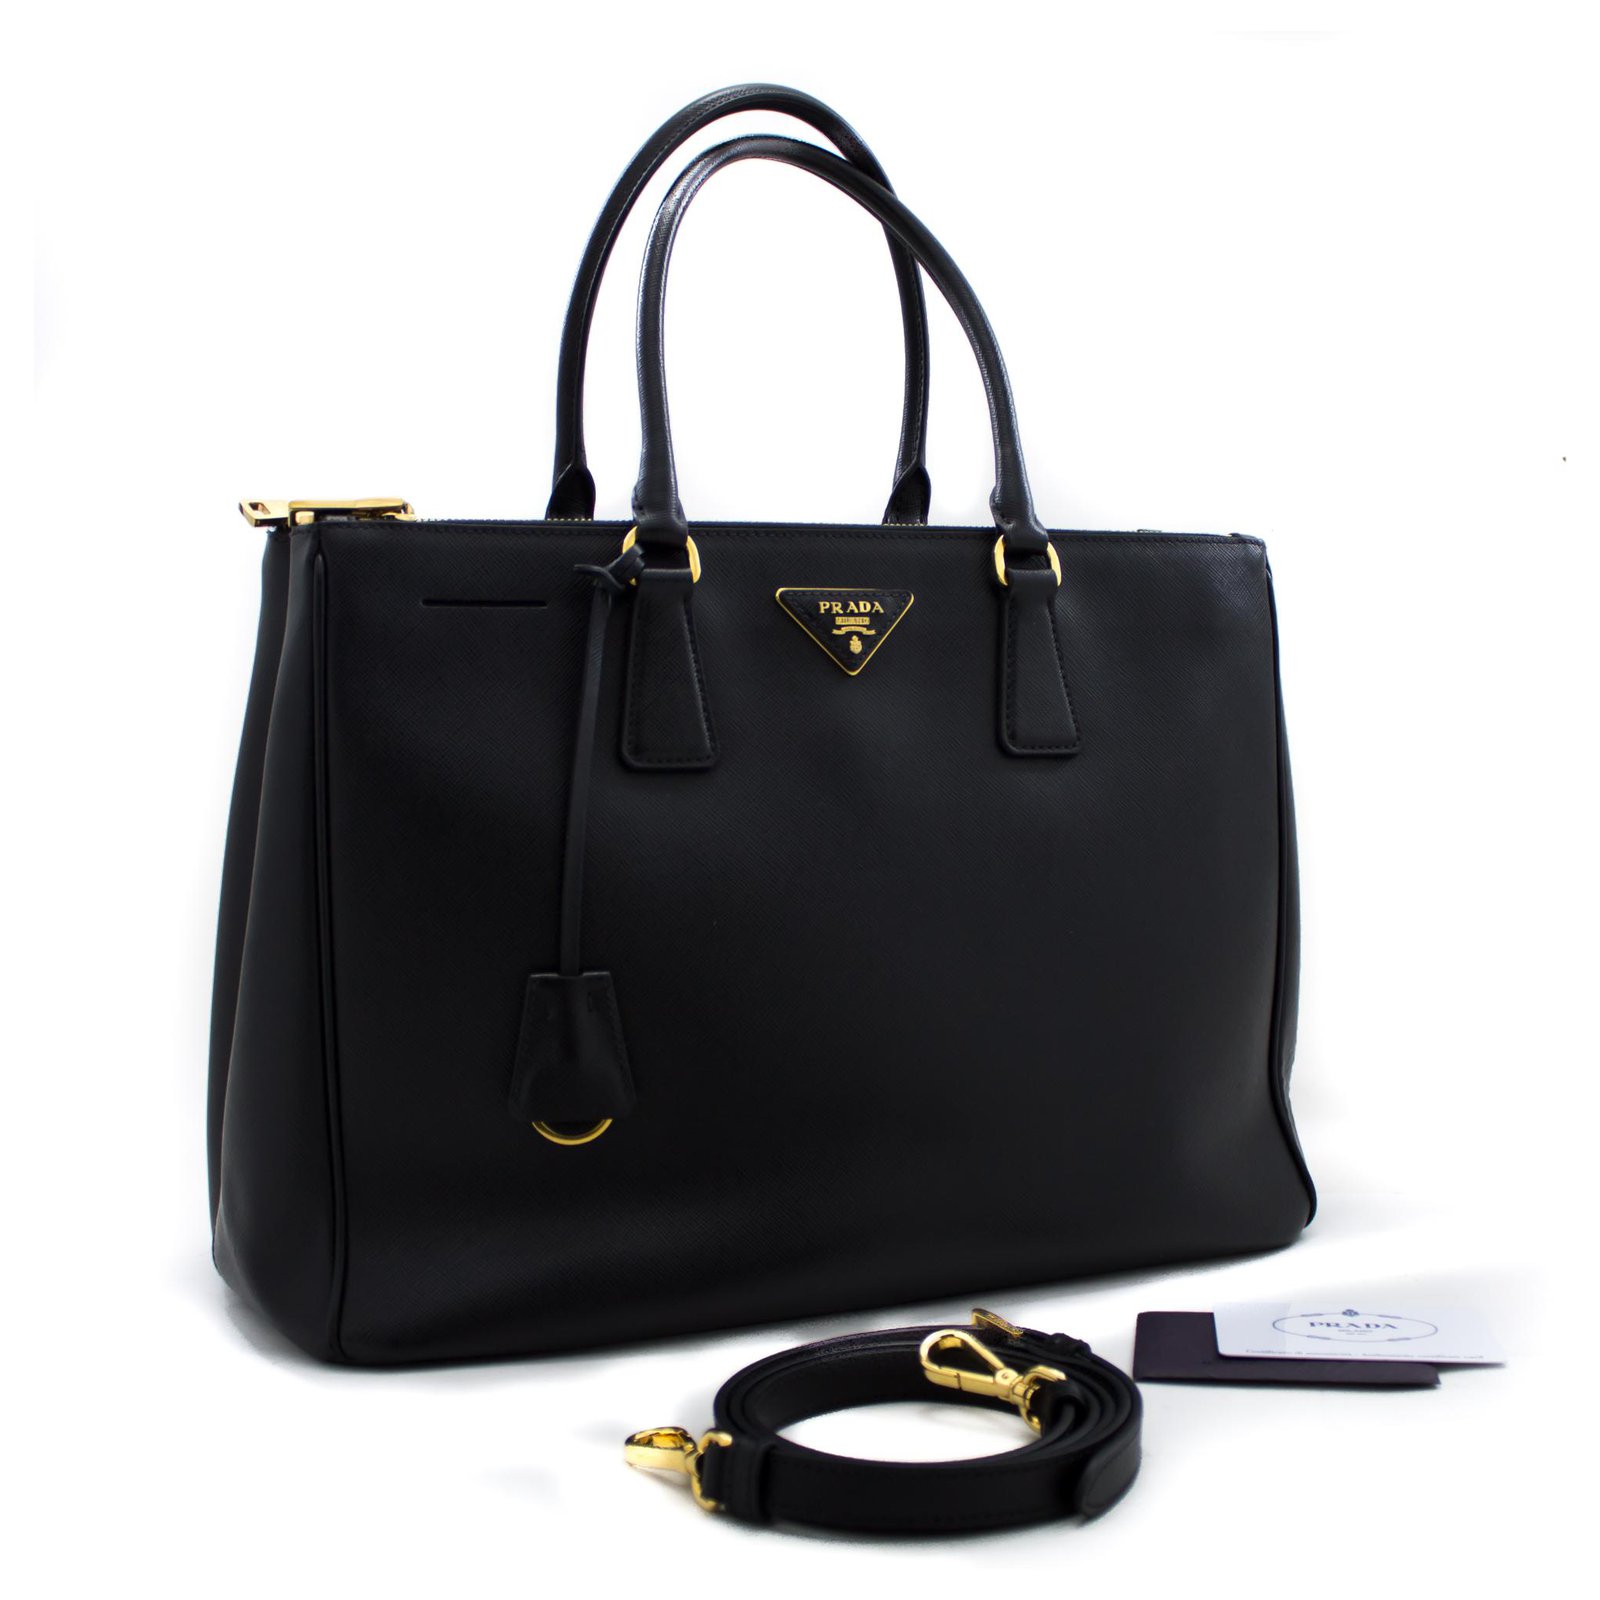 prada black leather handbag